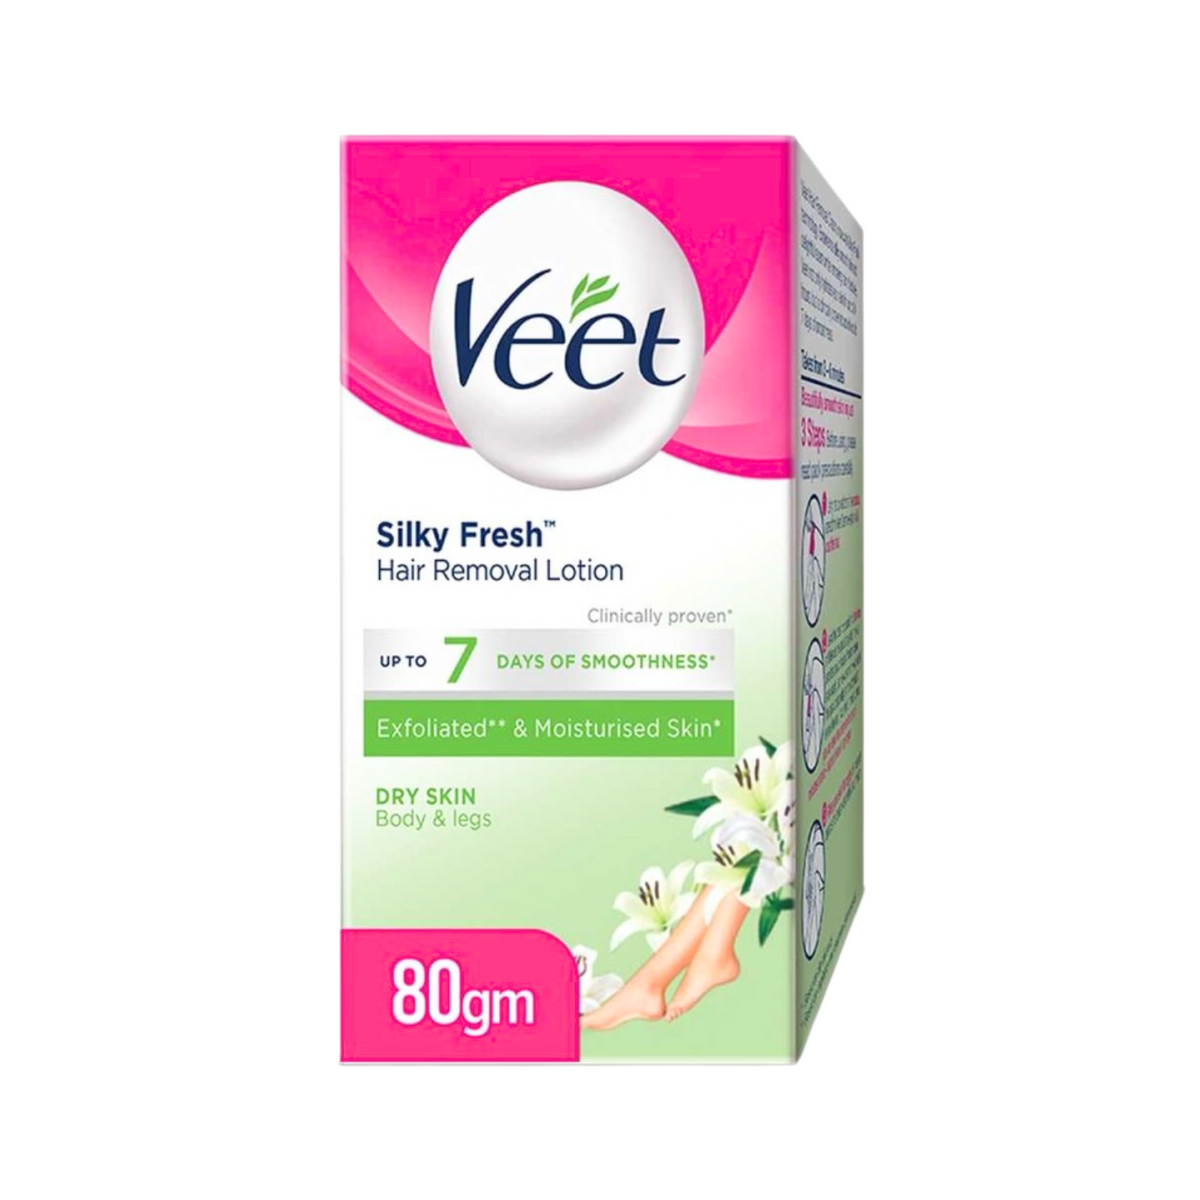 veet-silky-fresh-hair-removal-lotion-for-dry-skin-80g